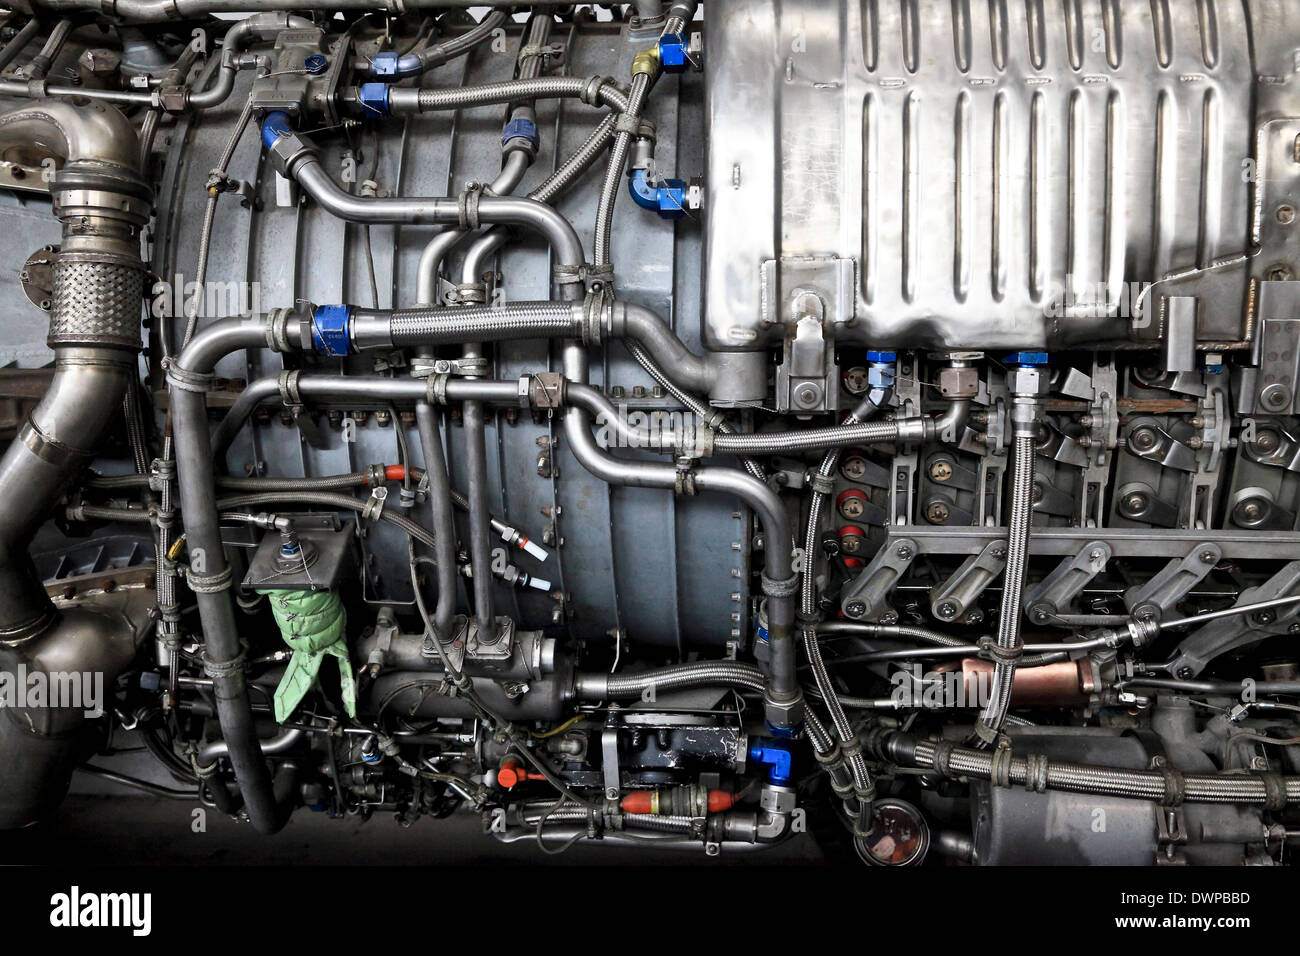 9381. General Electric Turbo Fan Jet Engine J79-GE-10, Manston Museum, Manston Kent, England Stock Photo